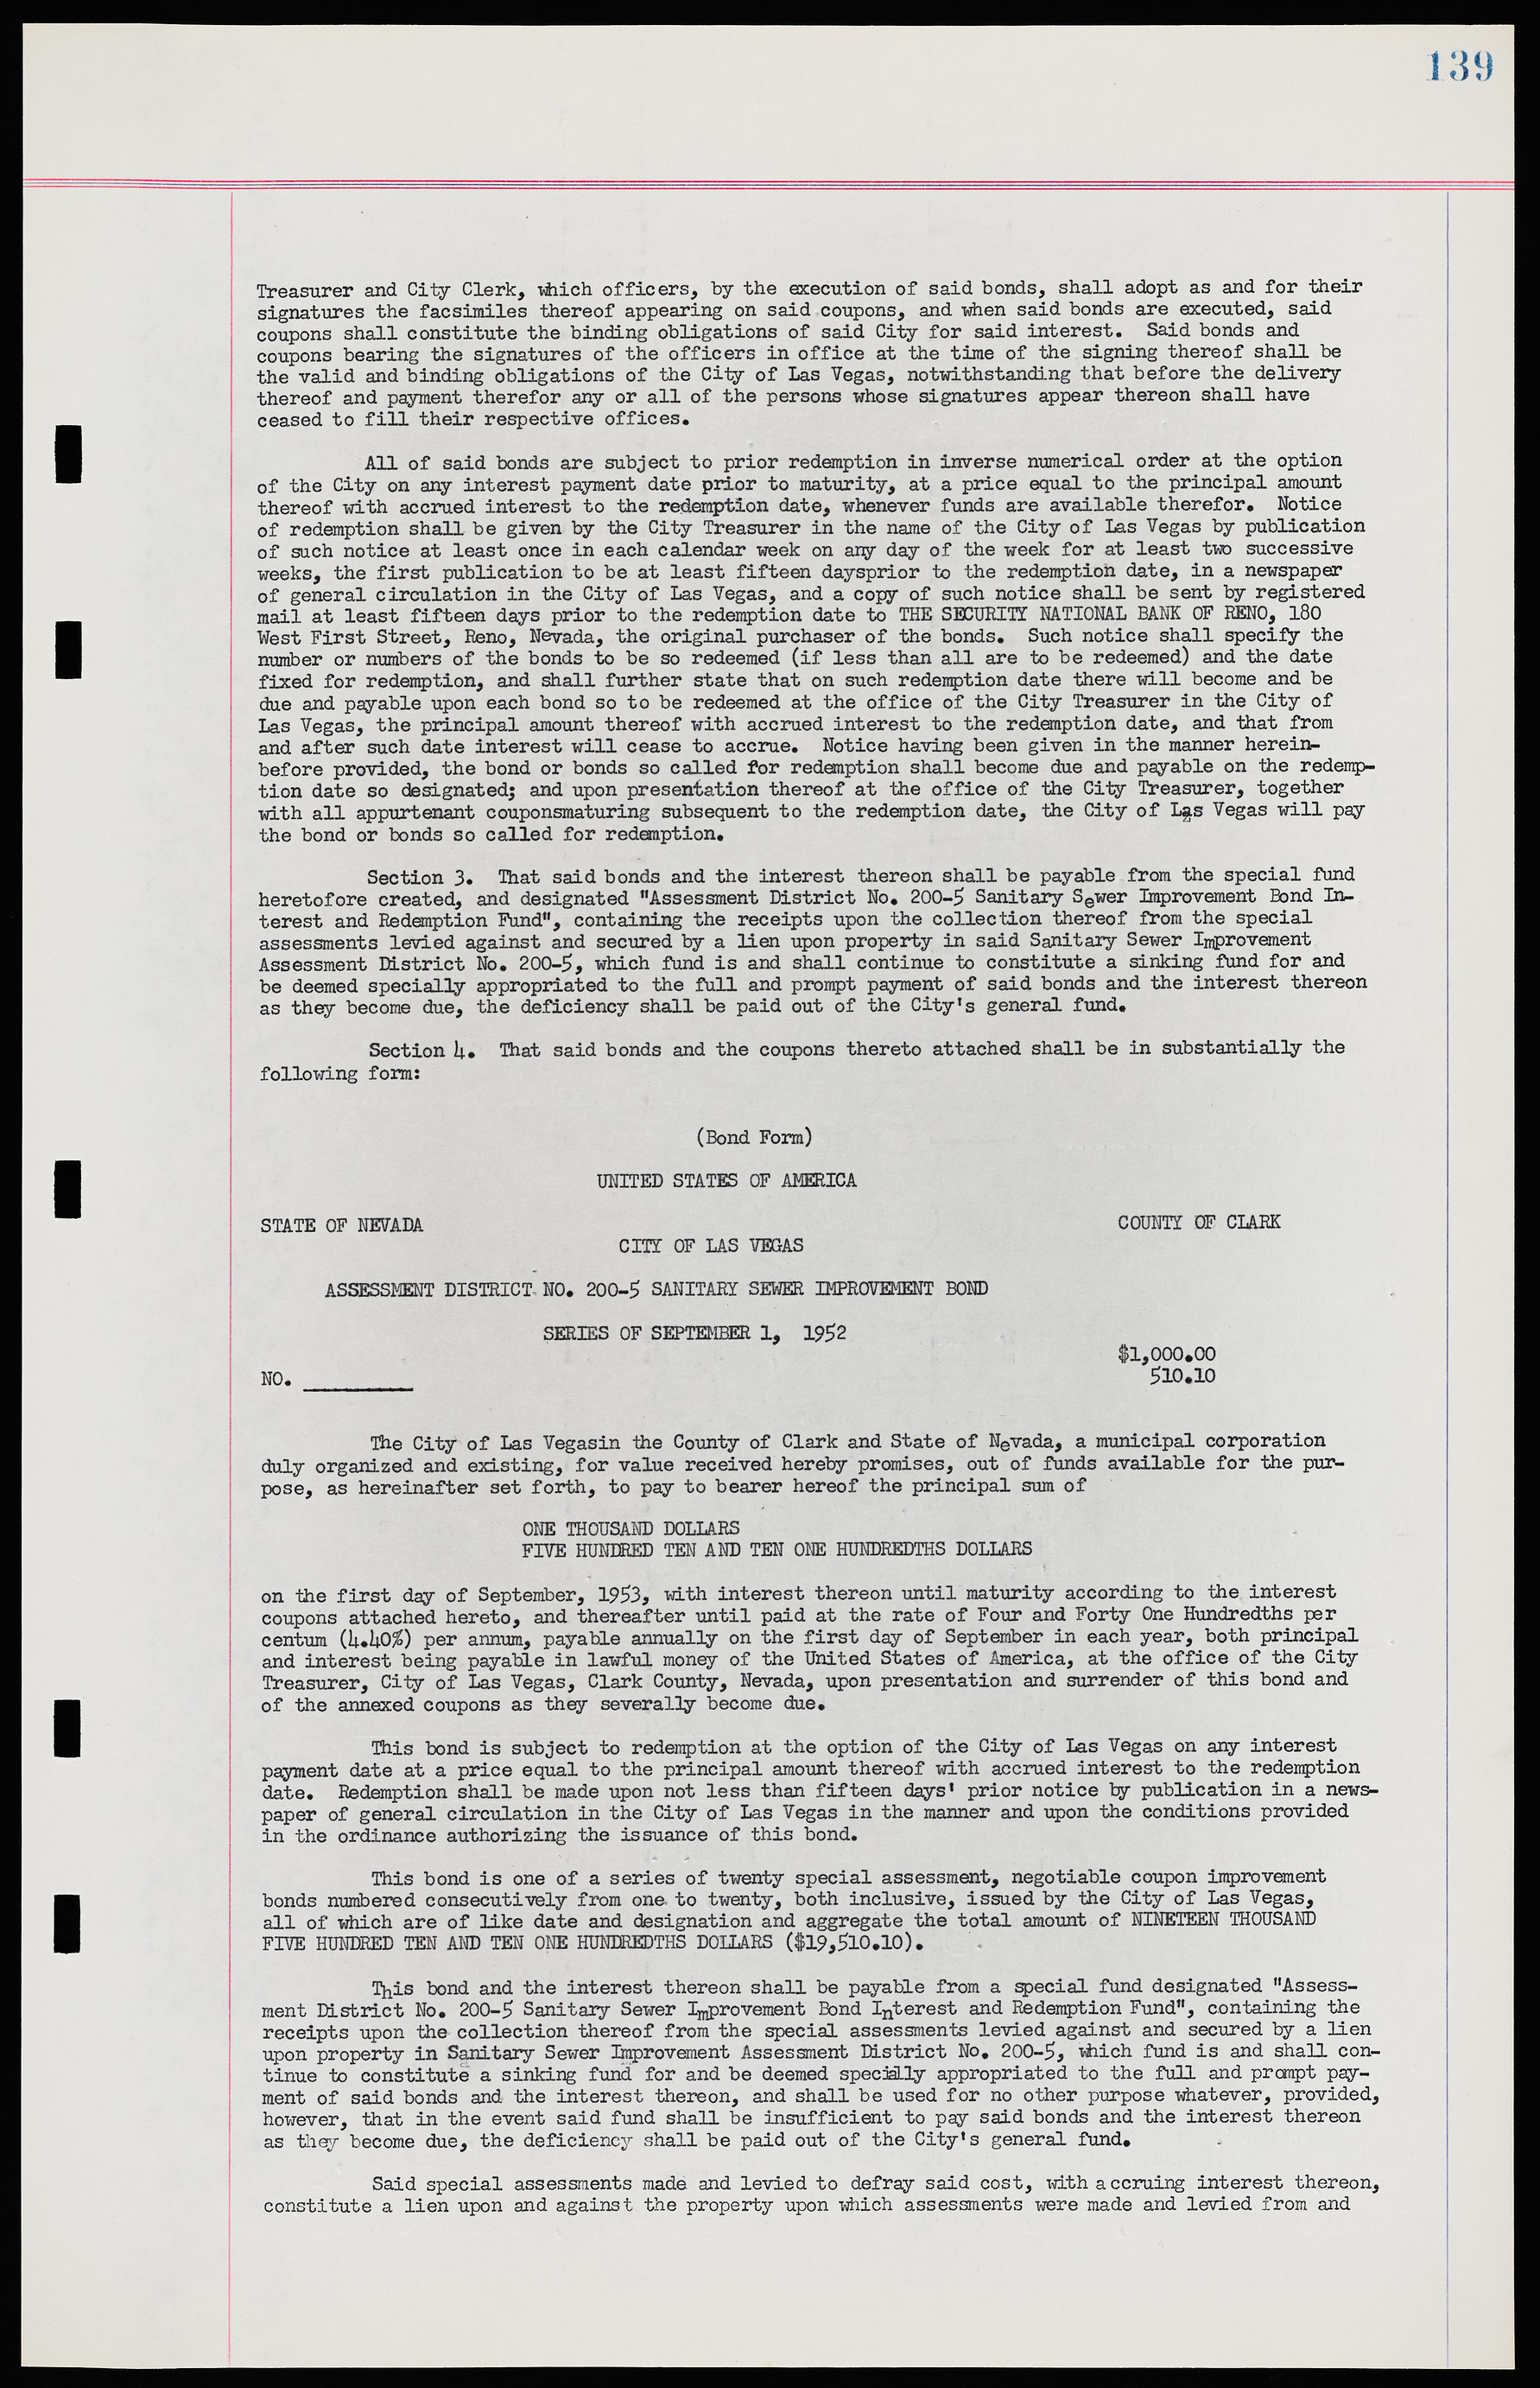 Las Vegas City Ordinances, November 13, 1950 to August 6, 1958, lvc000015-147